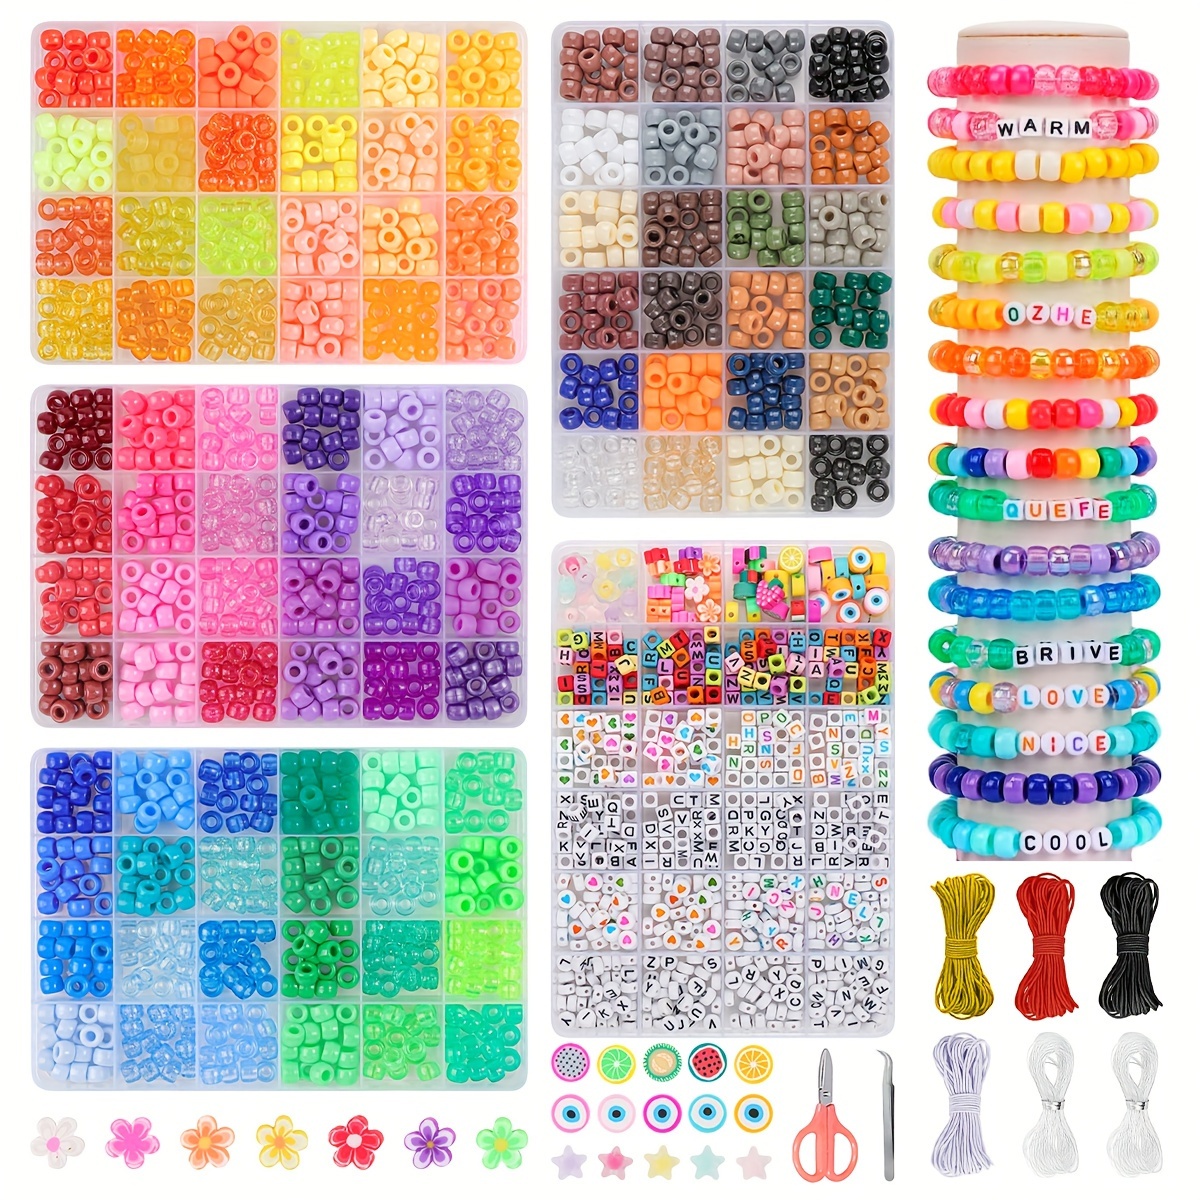 Quefe 3960pcs Pony Beads for Friendship Bracelet Making Kit 48 Colors Kandi  Beads Set, 2400pcs Plastic Rainbow Bulk and 1560pcs Letter Beads with 20